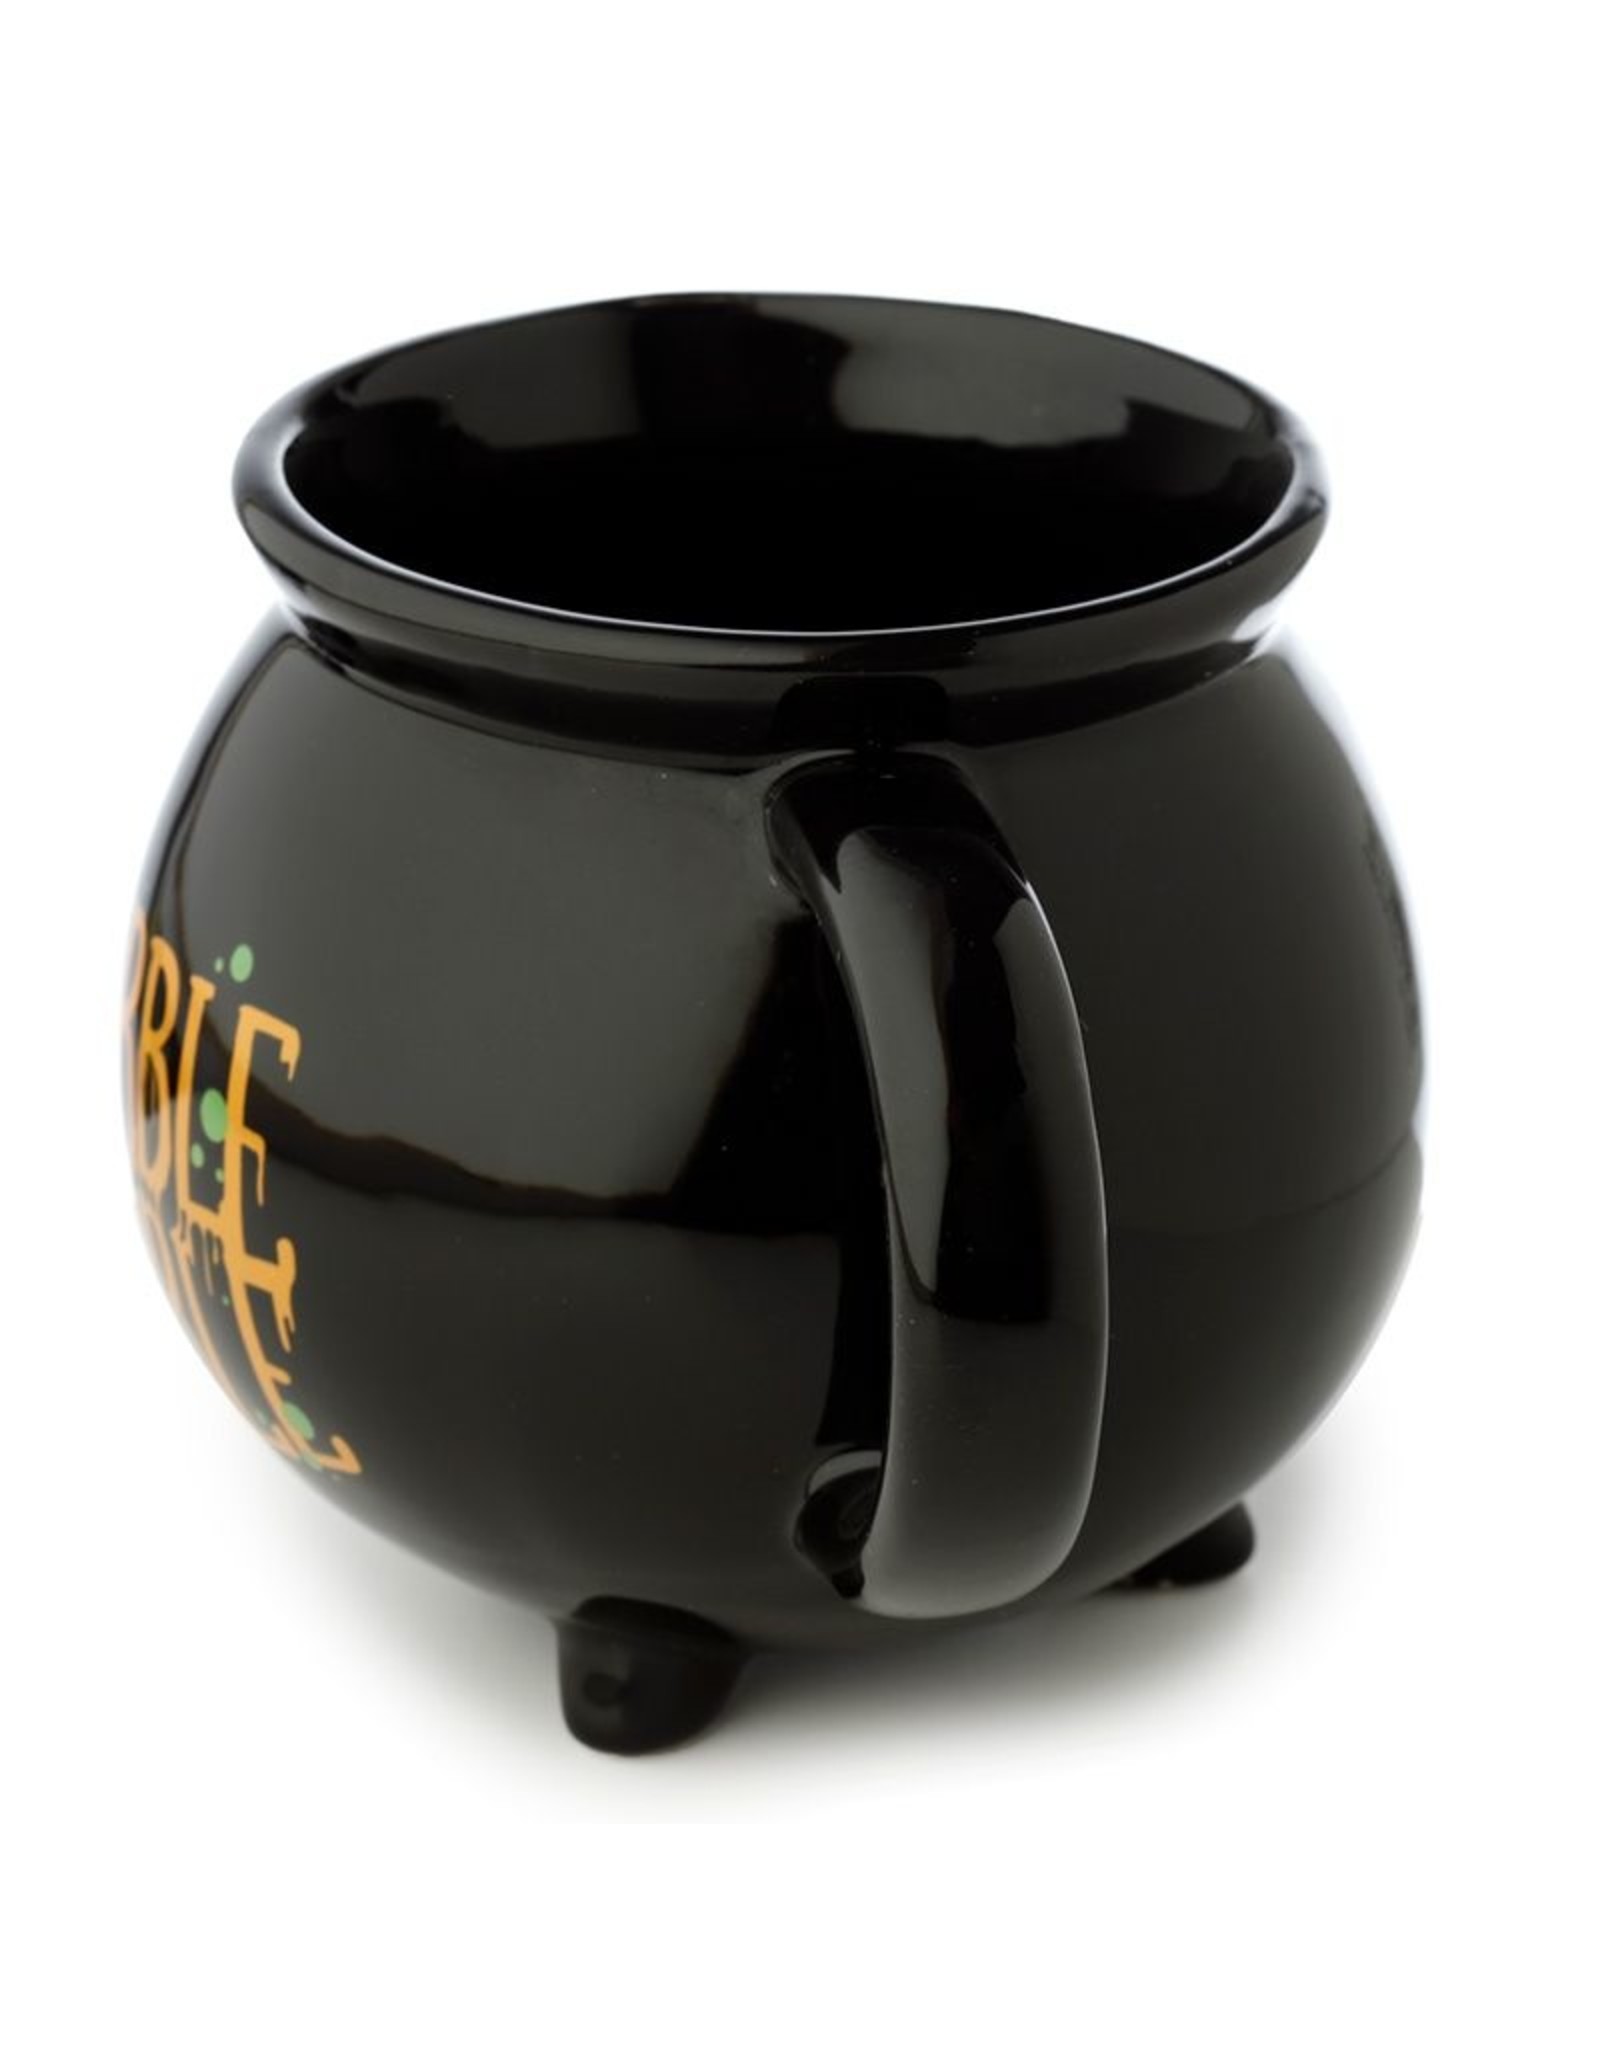 Puckator Drinkware - Hubble Bubble Witch's Cauldron Ceramic Mug